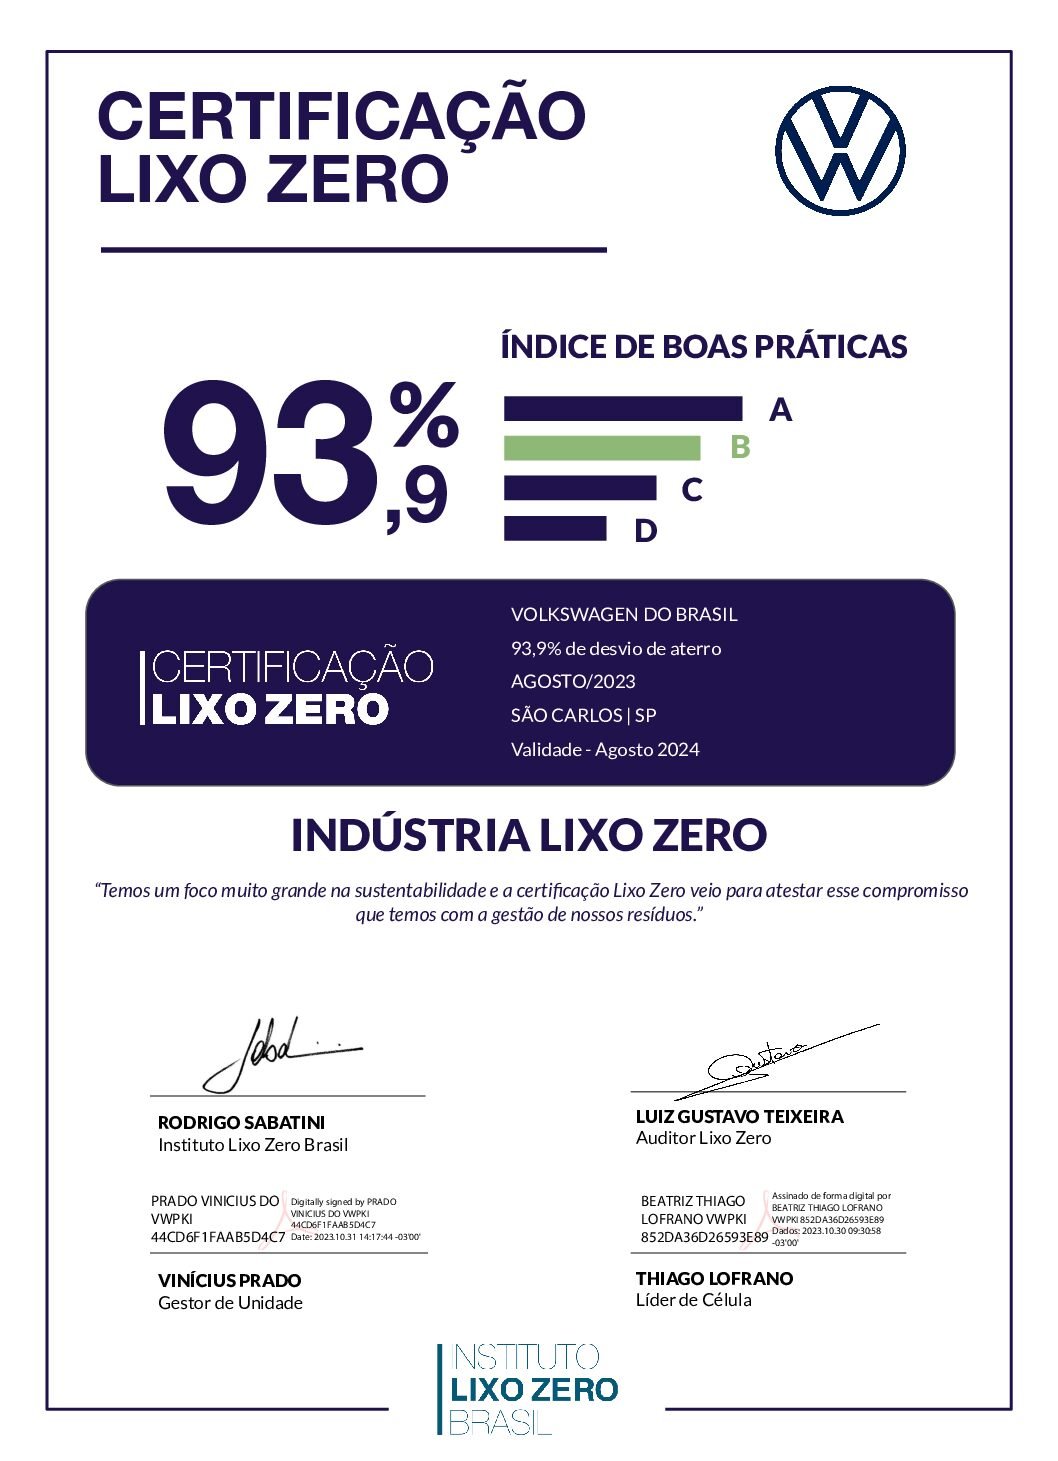 CertificaçãoLixoZero_Volkswagen_São Carlos_SP_Agosto_2023